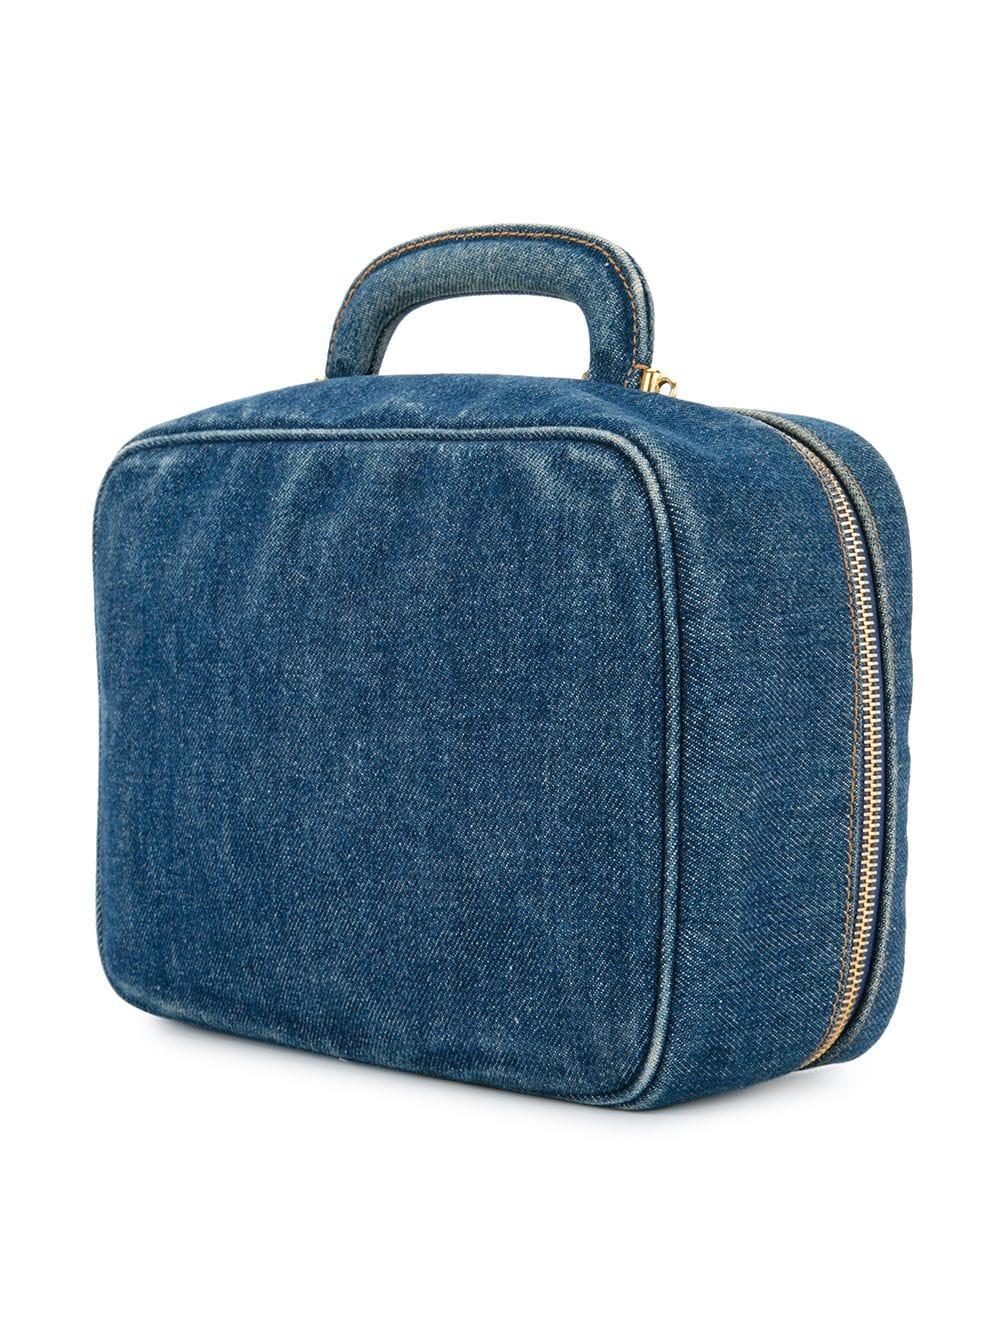 Chanel Vanity Case Rare Vintage Blue Mini Crossbody Black Denim Shoulder Bag en vente 2